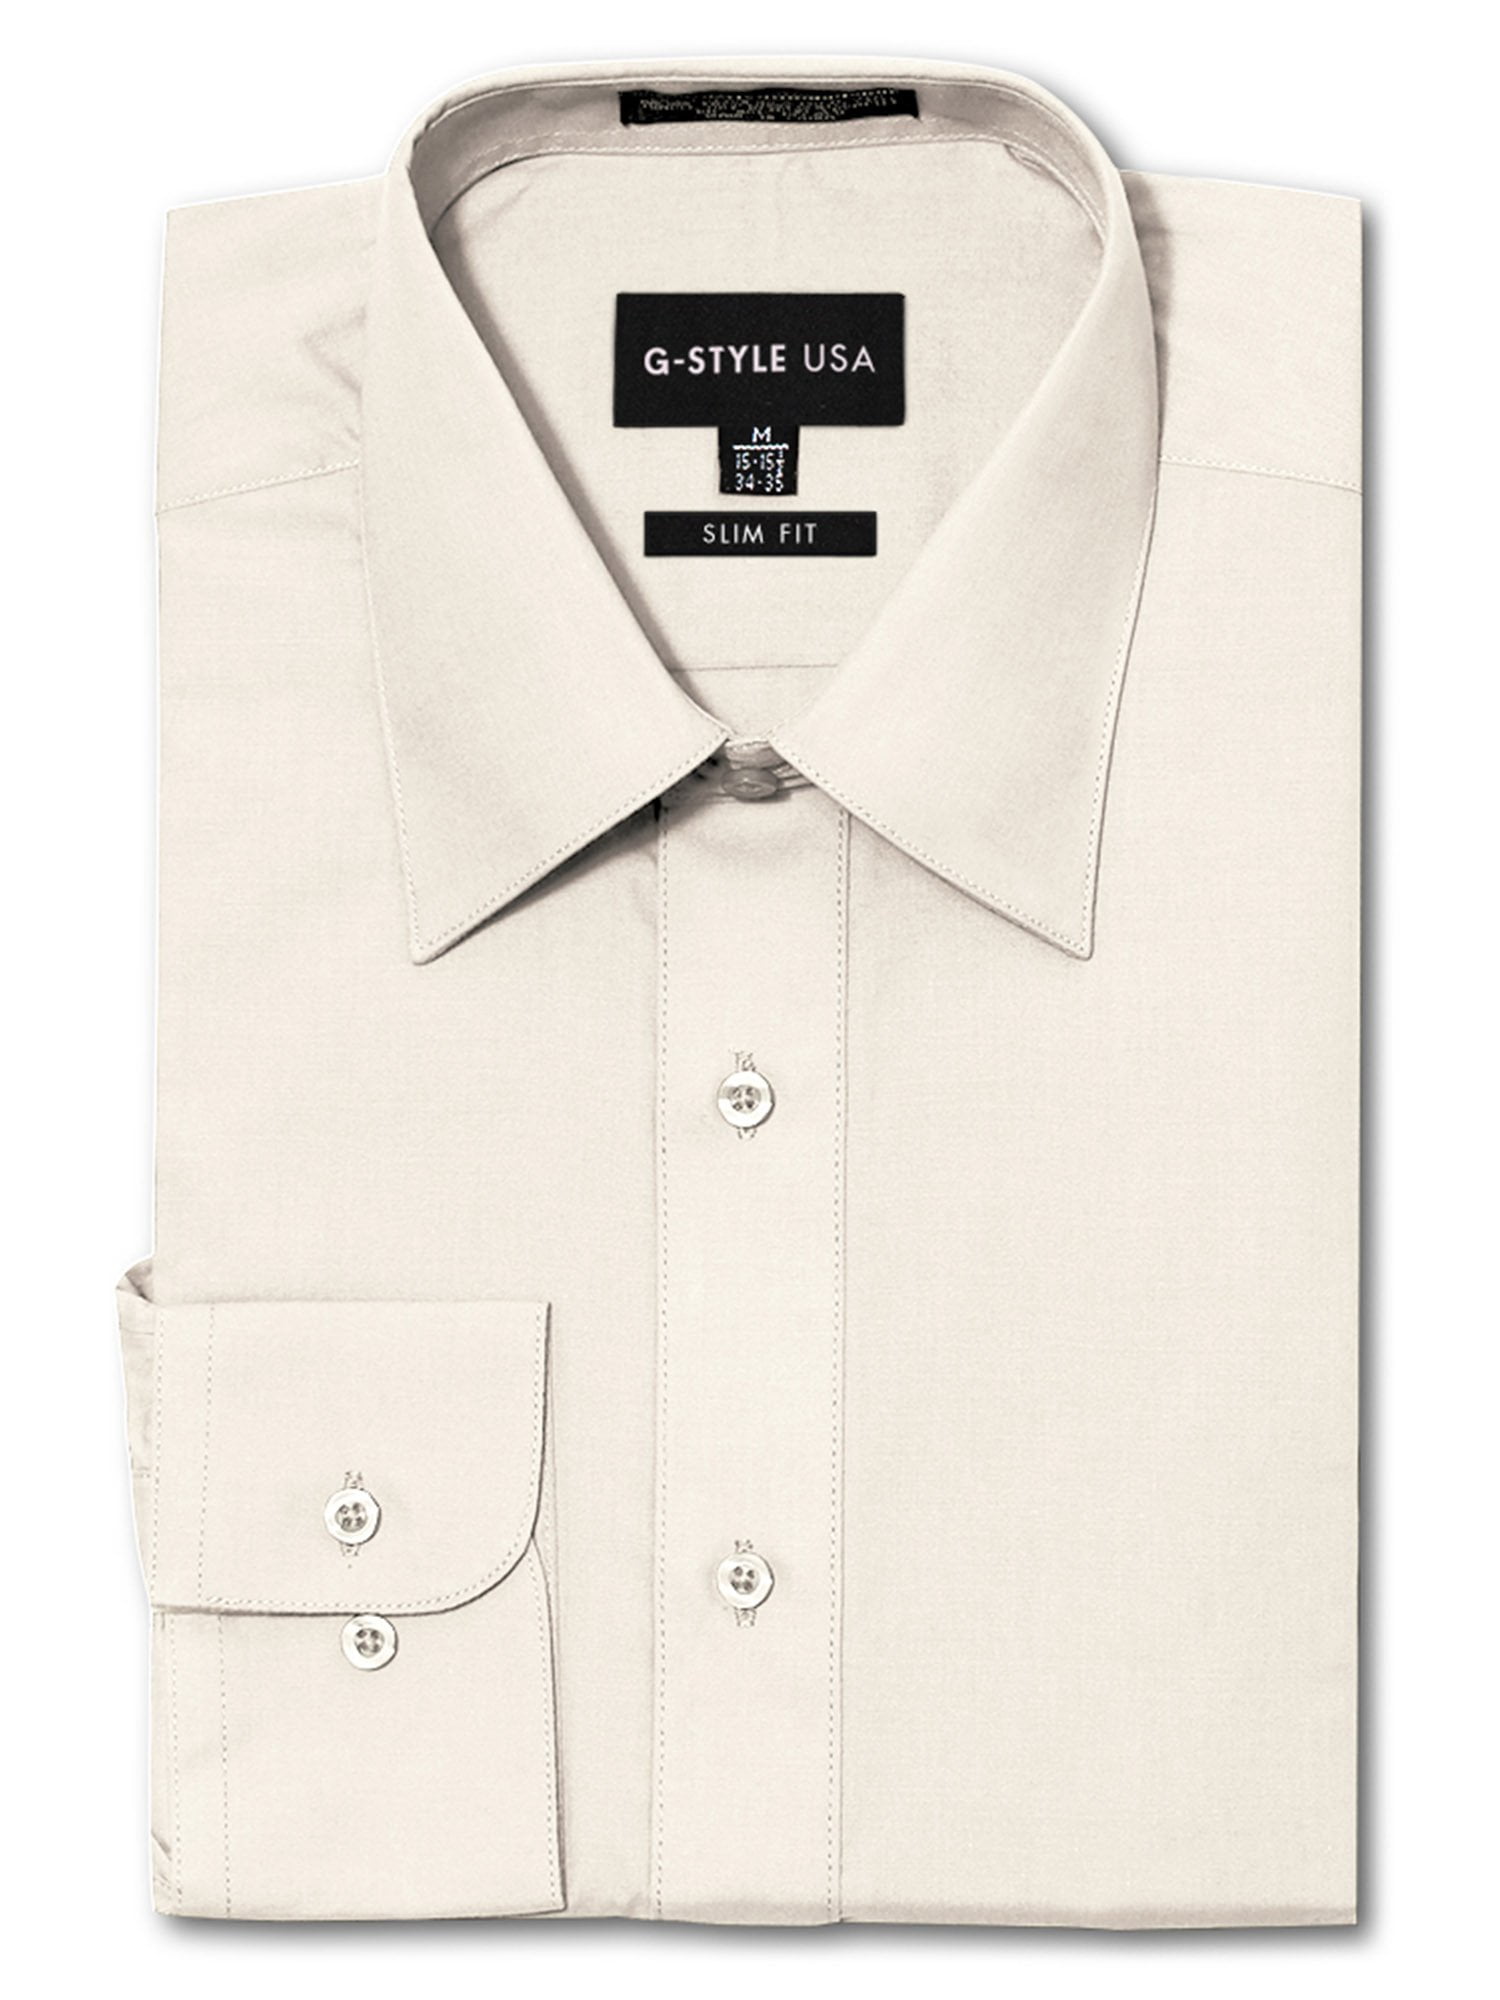 G-Style USA Fit Long Sleeve Dress Shirt - Ivory - 2XL/18-18.5/36-37 - Walmart.com